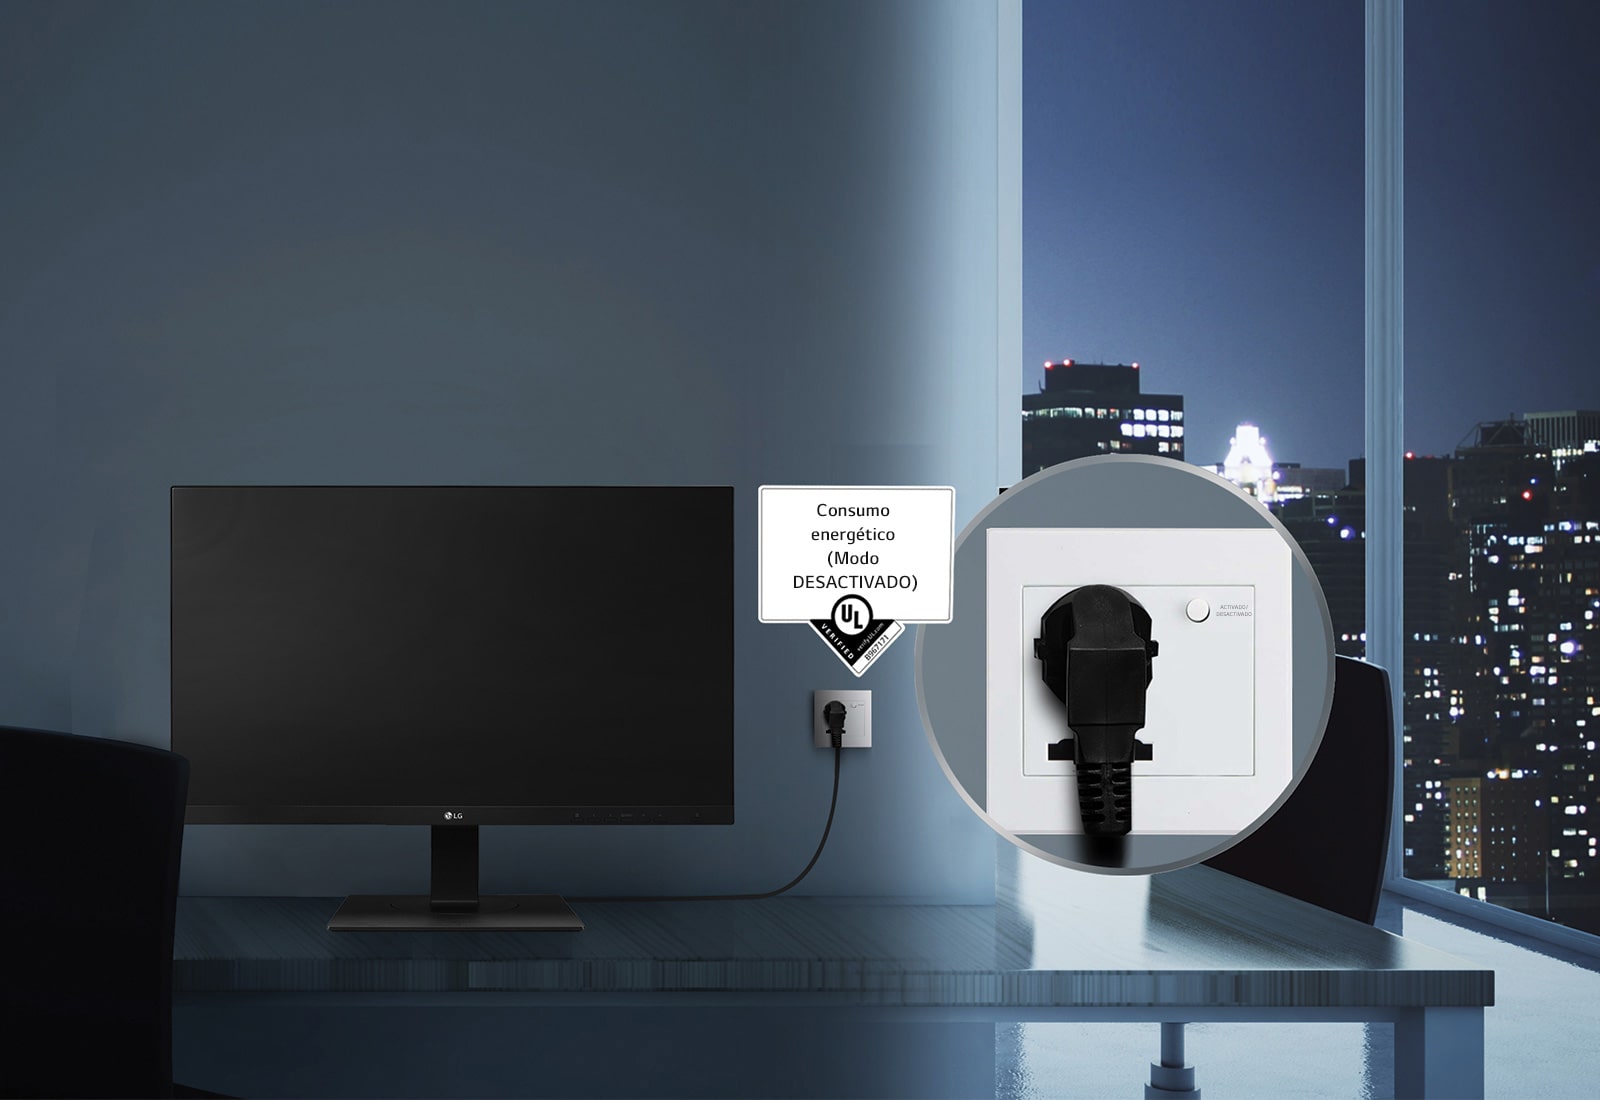 LG Monitor profesional de 61 cm (24 pulgadas) Full HD IPS LED 16:10, F